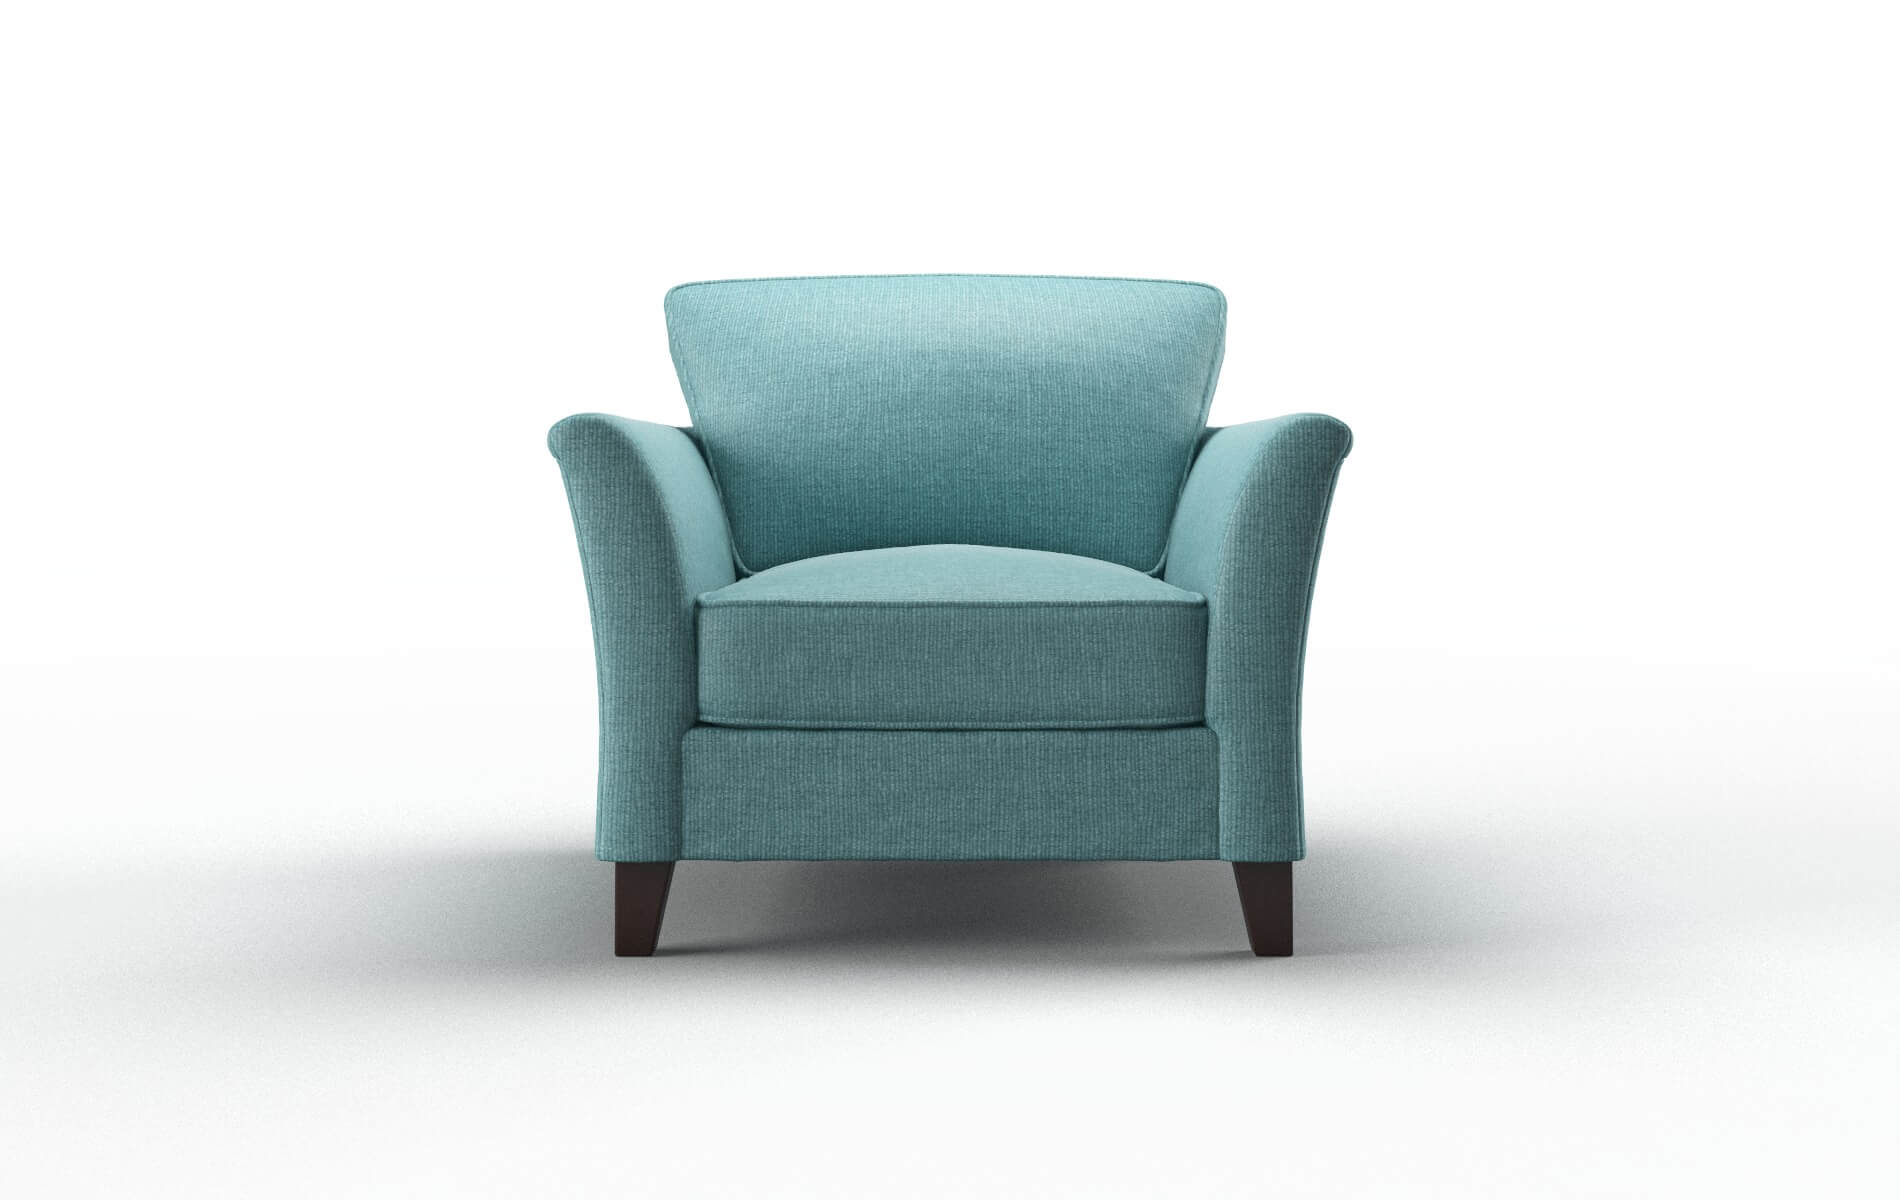 Cologne Parker Turquoise chair espresso legs